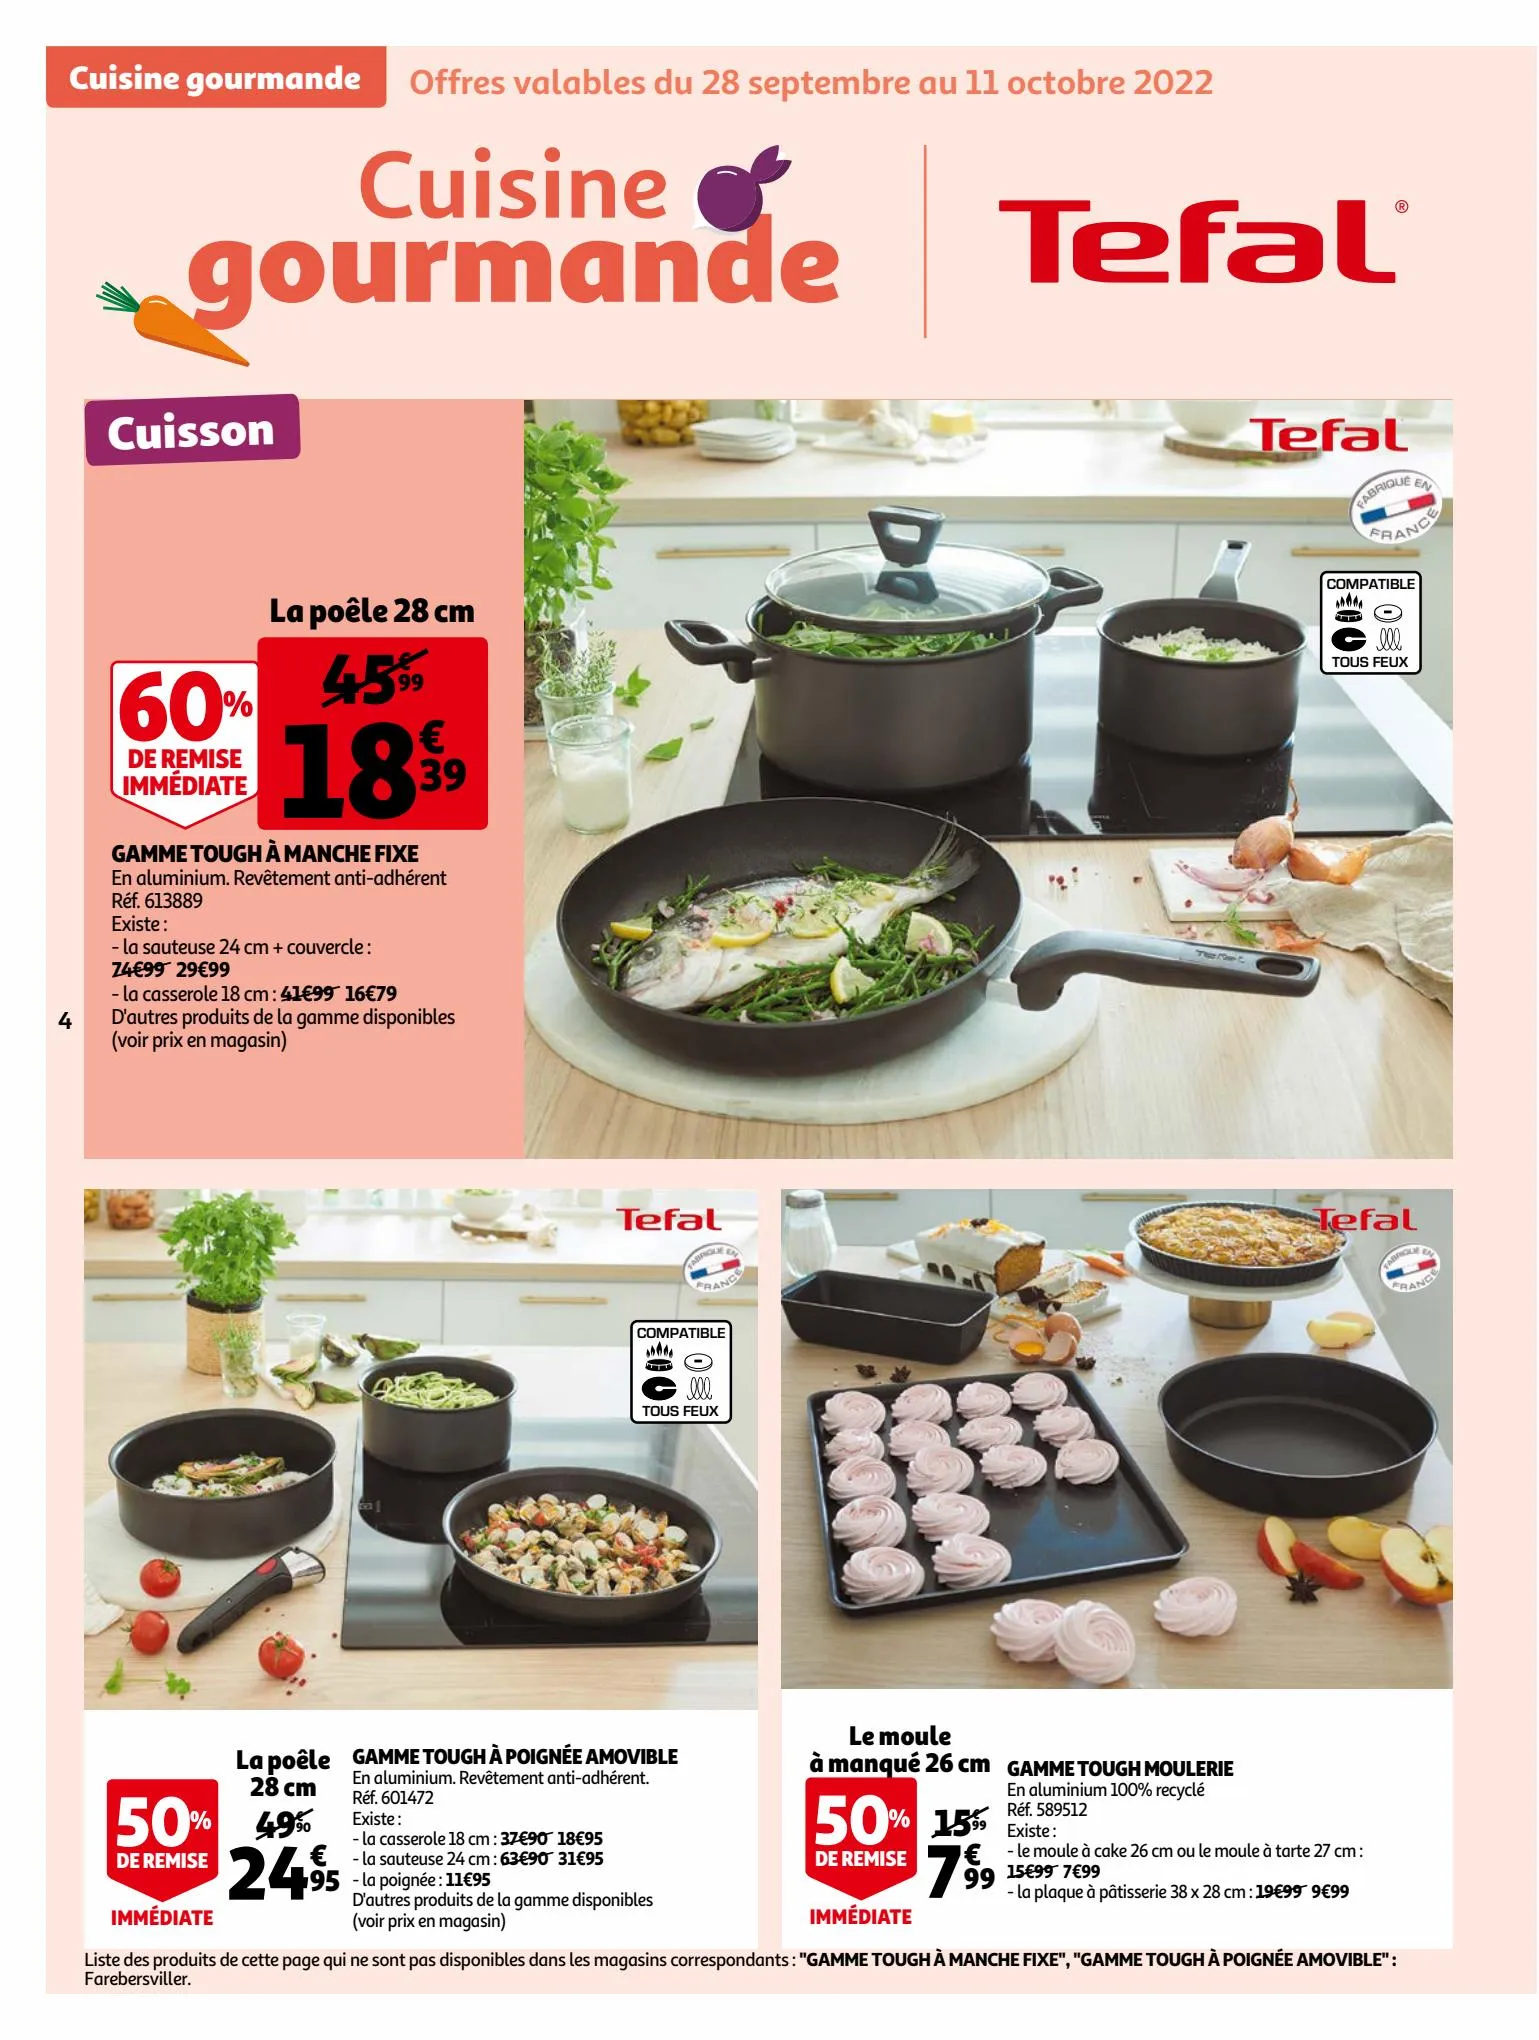 Catalogue Cuisine gourmande, page 00004